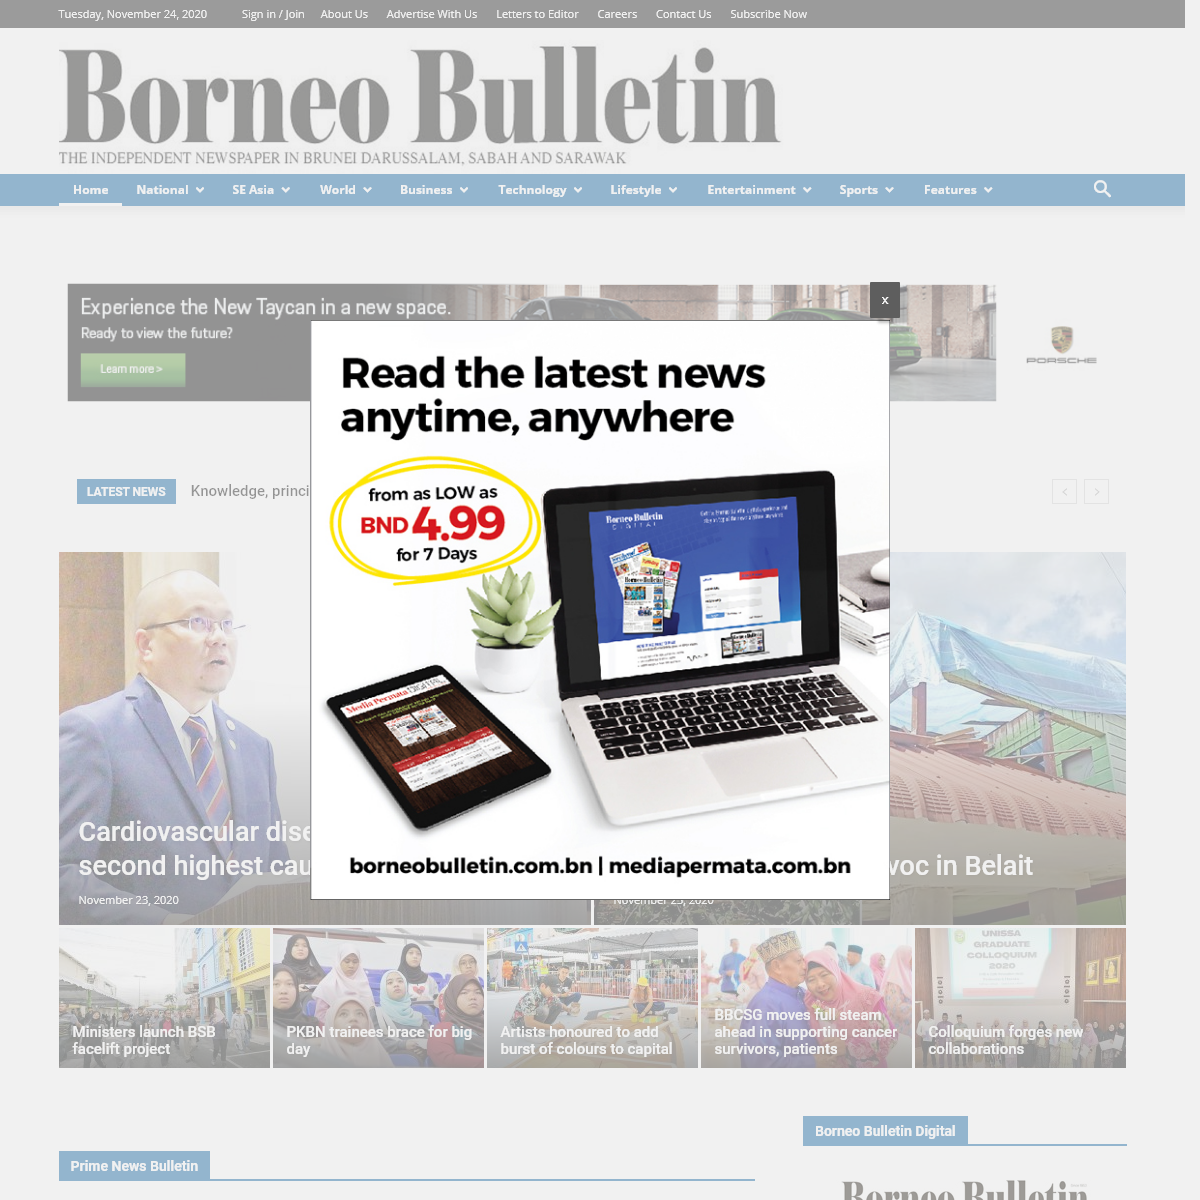 A complete backup of borneobulletin.com.bn